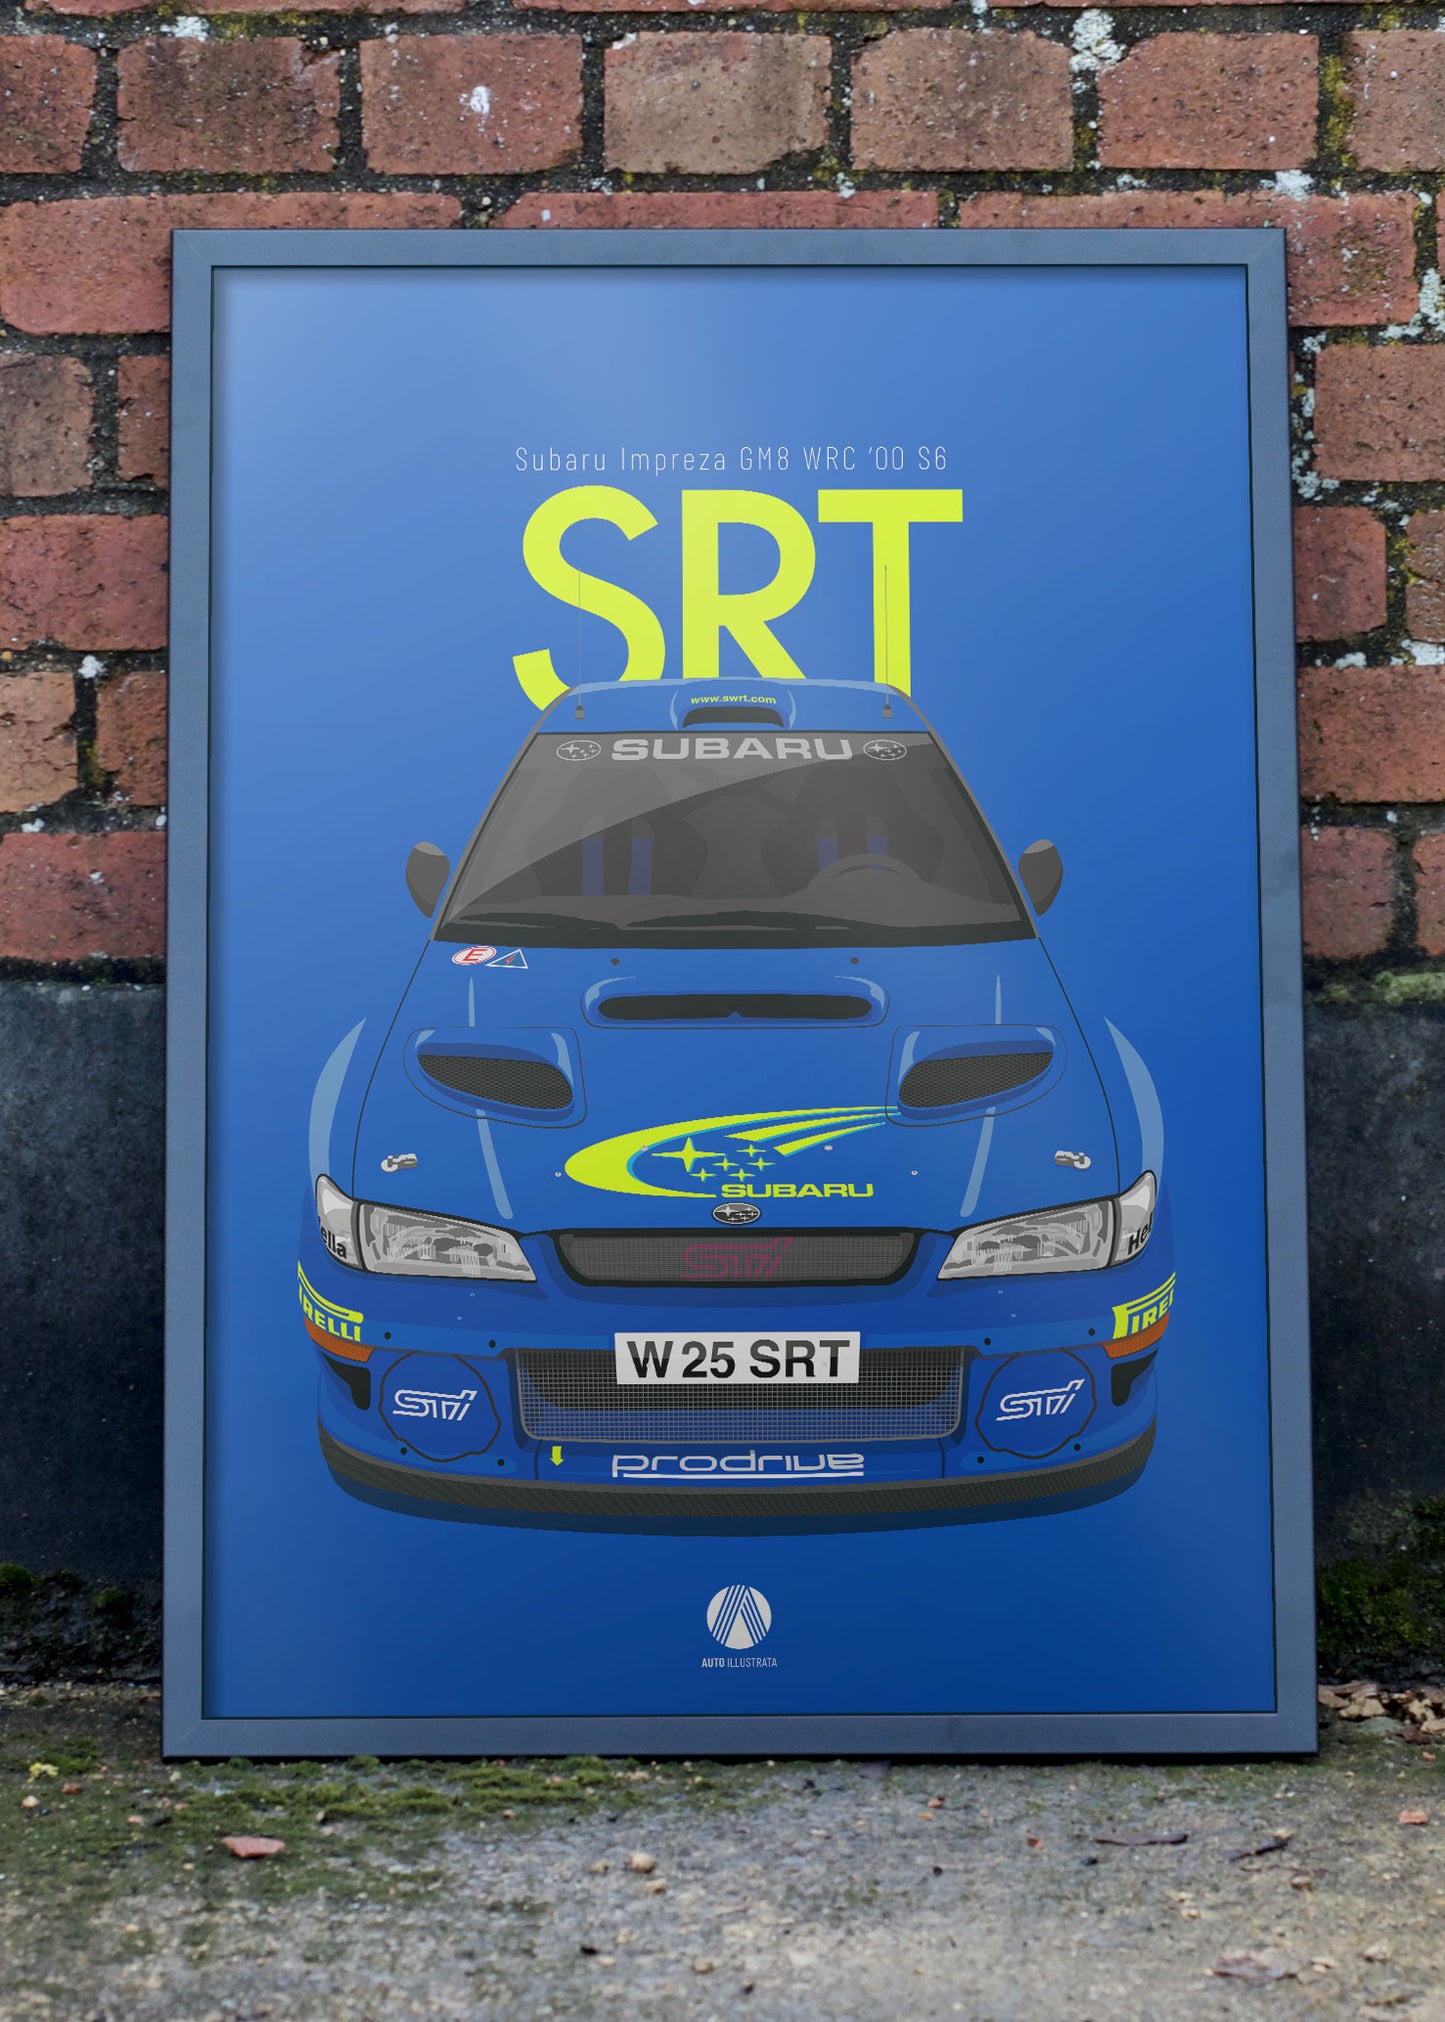 2000 Subaru Impreza GM8 WRC '00 S6 - poster print